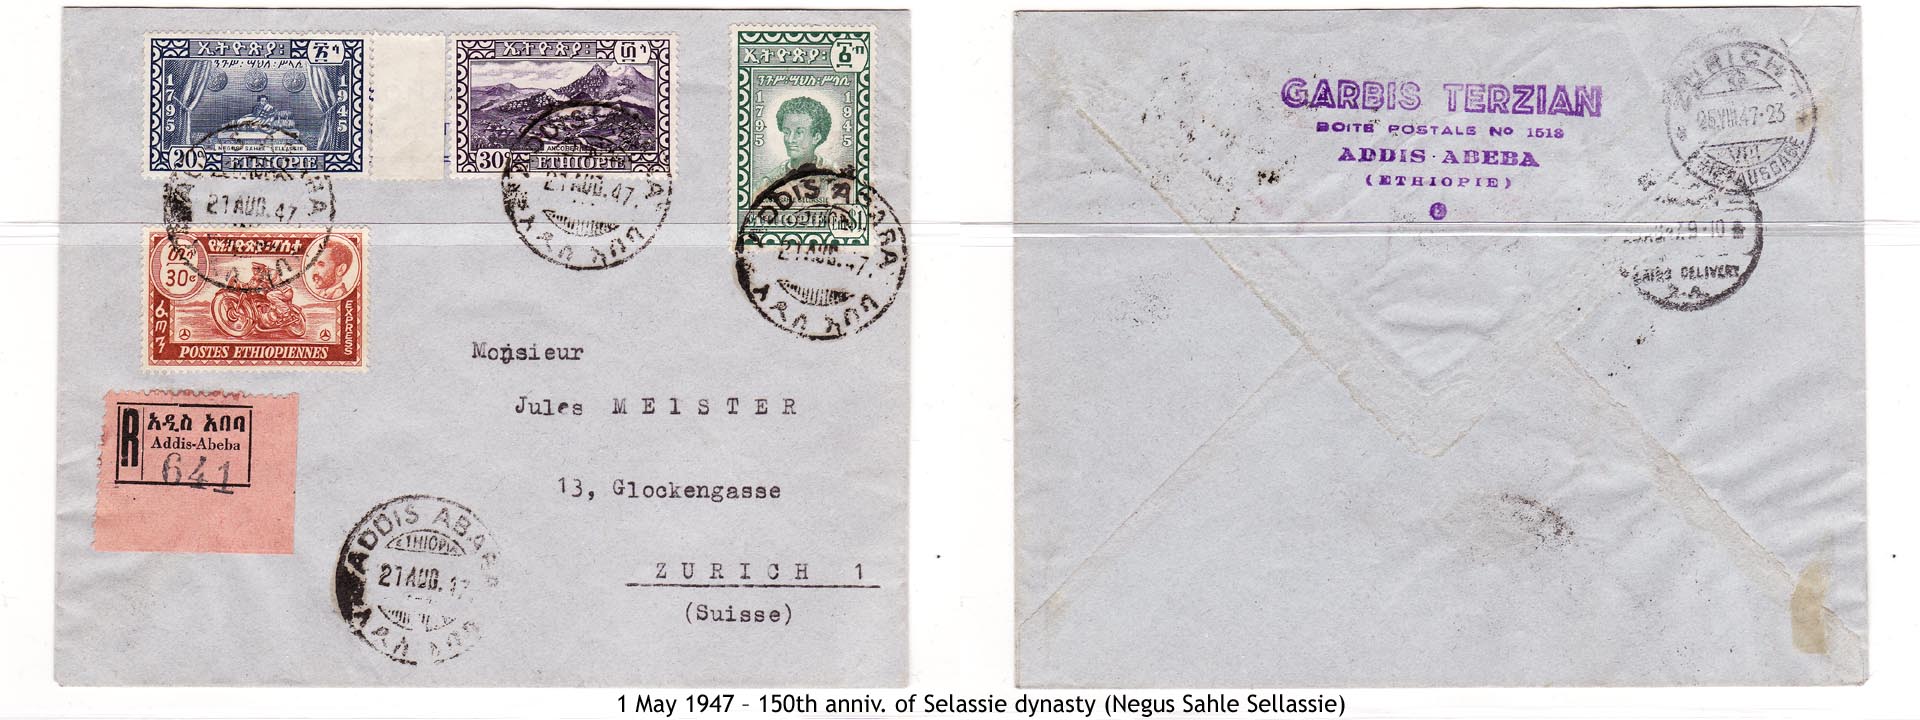 19470501 – 150th anniv. of Selassie dynasty (Negus Sahle Sellassie)